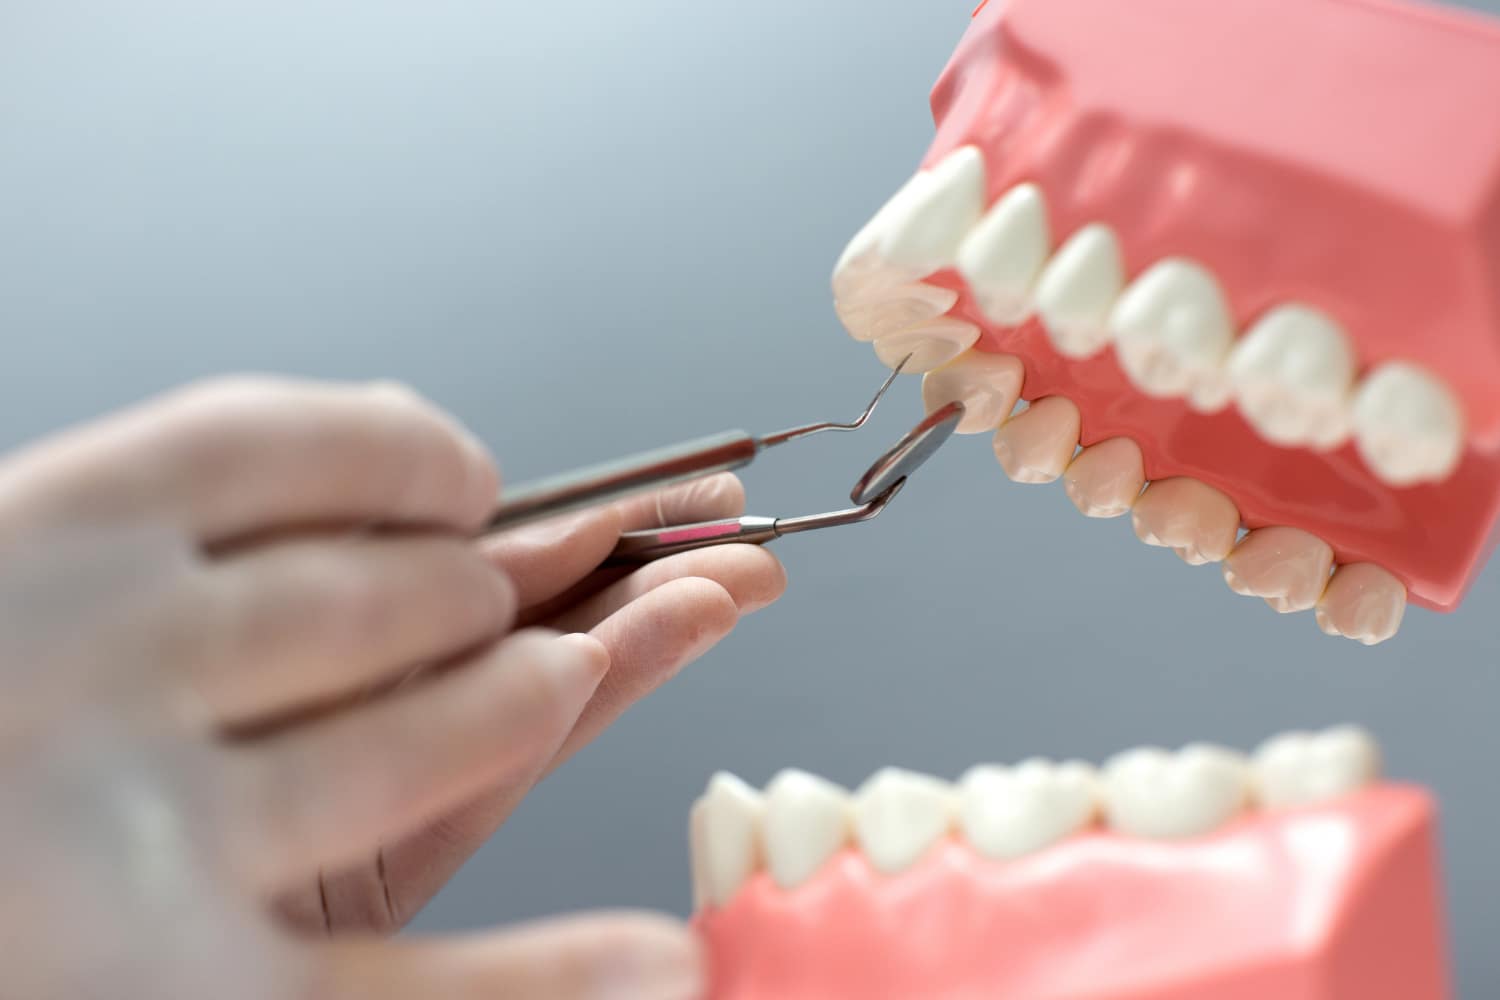 Dental Implants vs. Dental Bridges